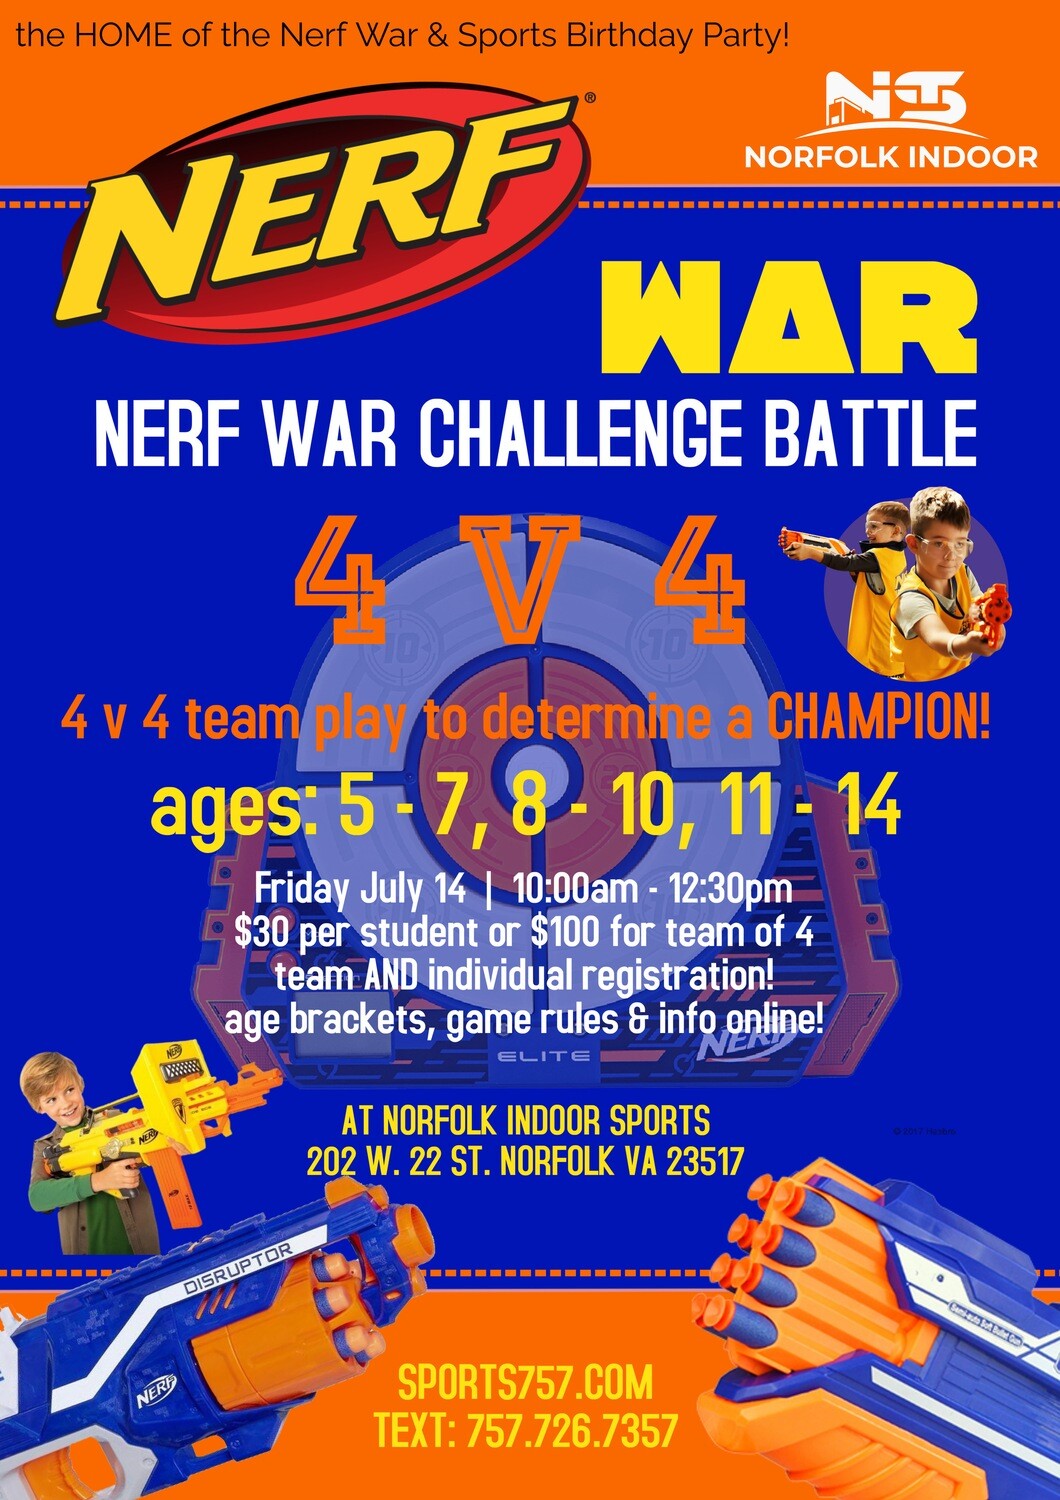 July 14 - Nerf Battle Challenge